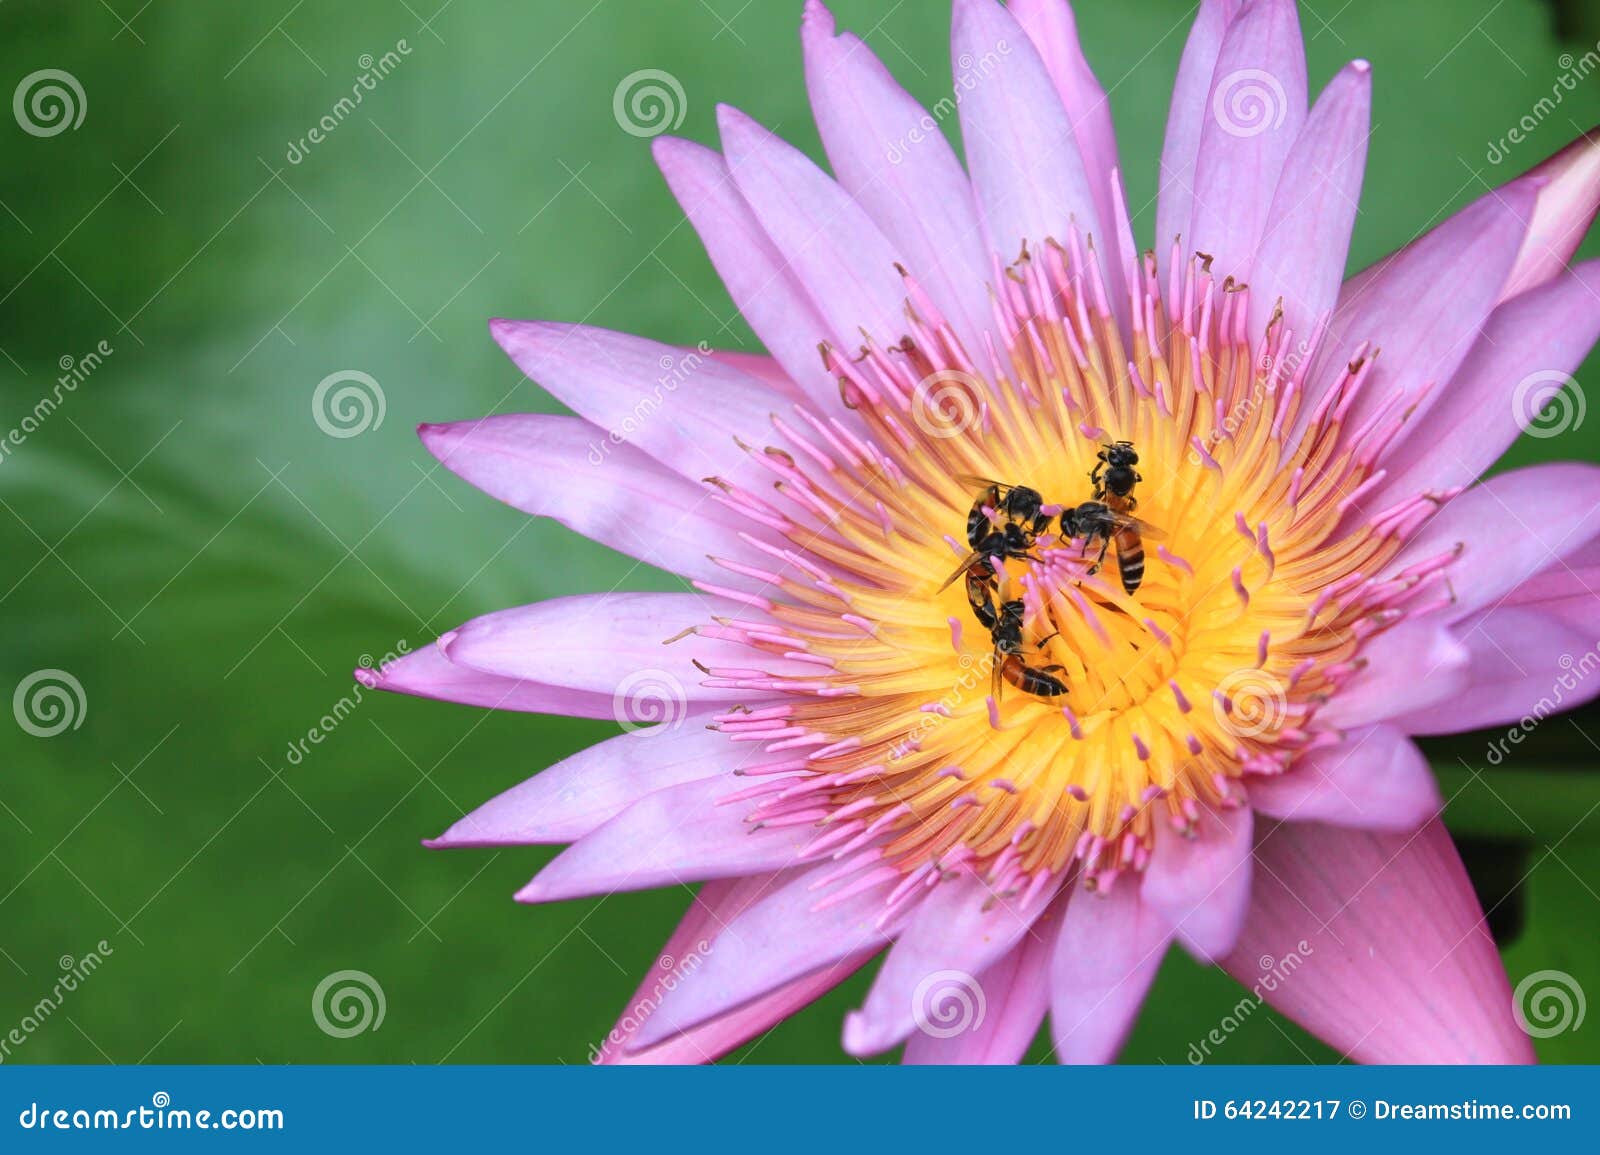 Пчелы с лотосом. Пчелы внутри красивого розового лотоса